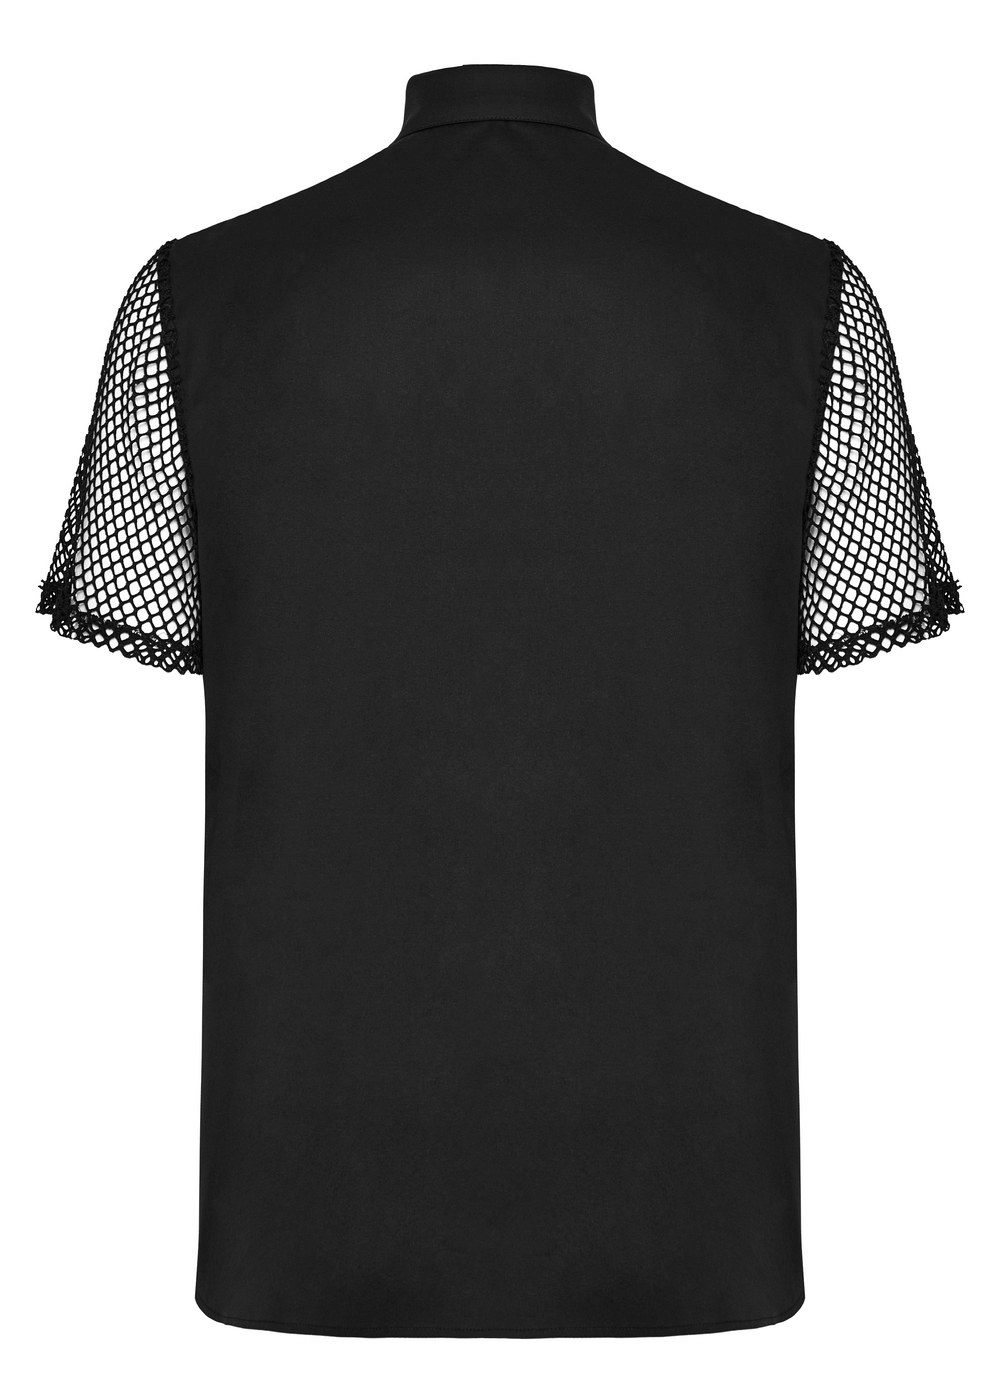 Punk Style Mesh Panel Tactical Black Shirt for Men